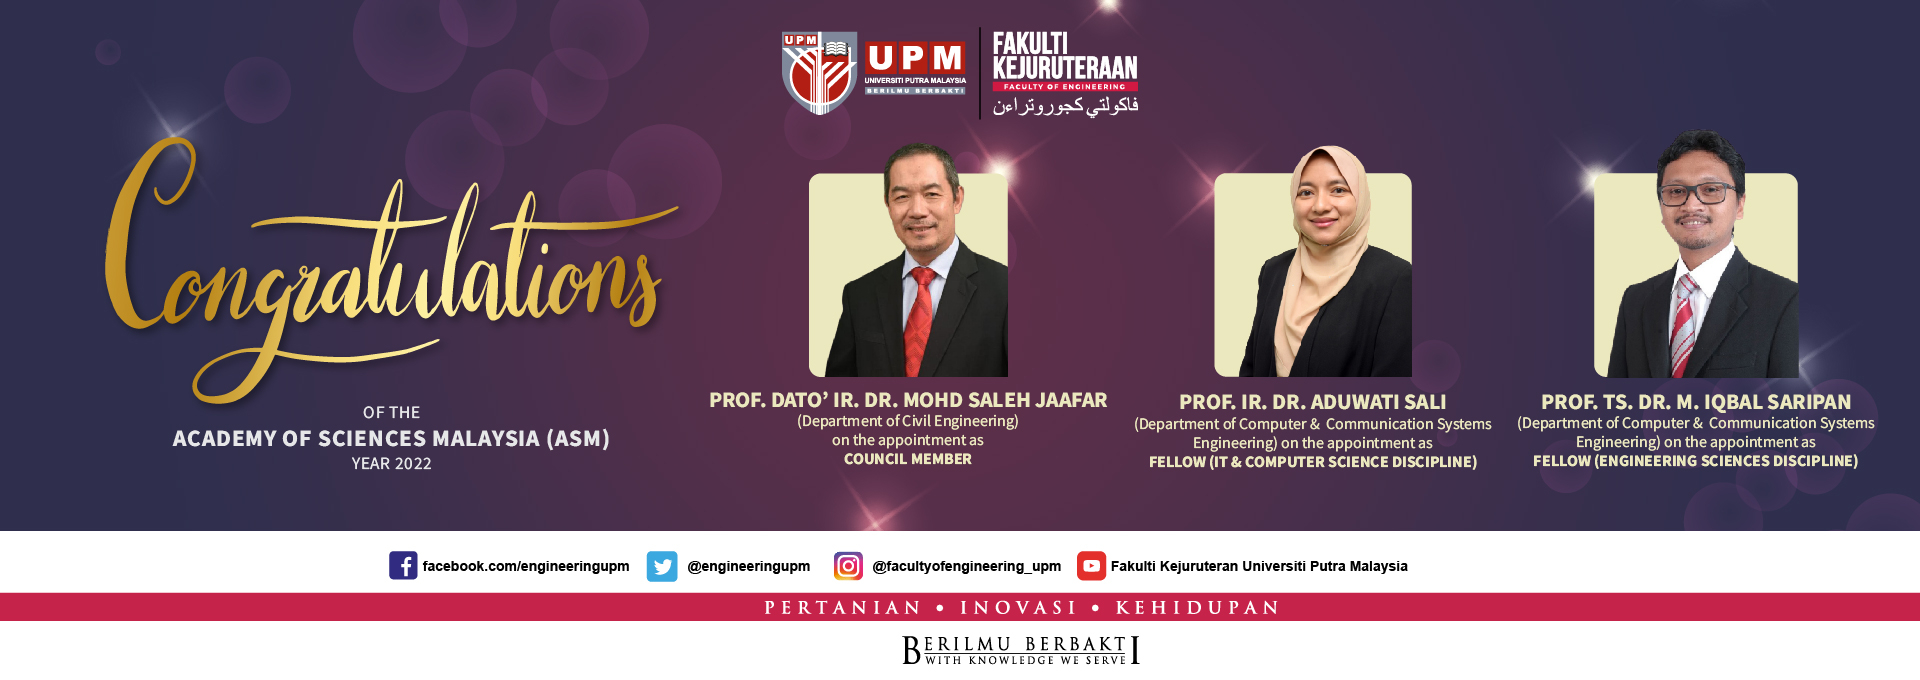 Congratulation of academy of sciences malaysia ( ASM )